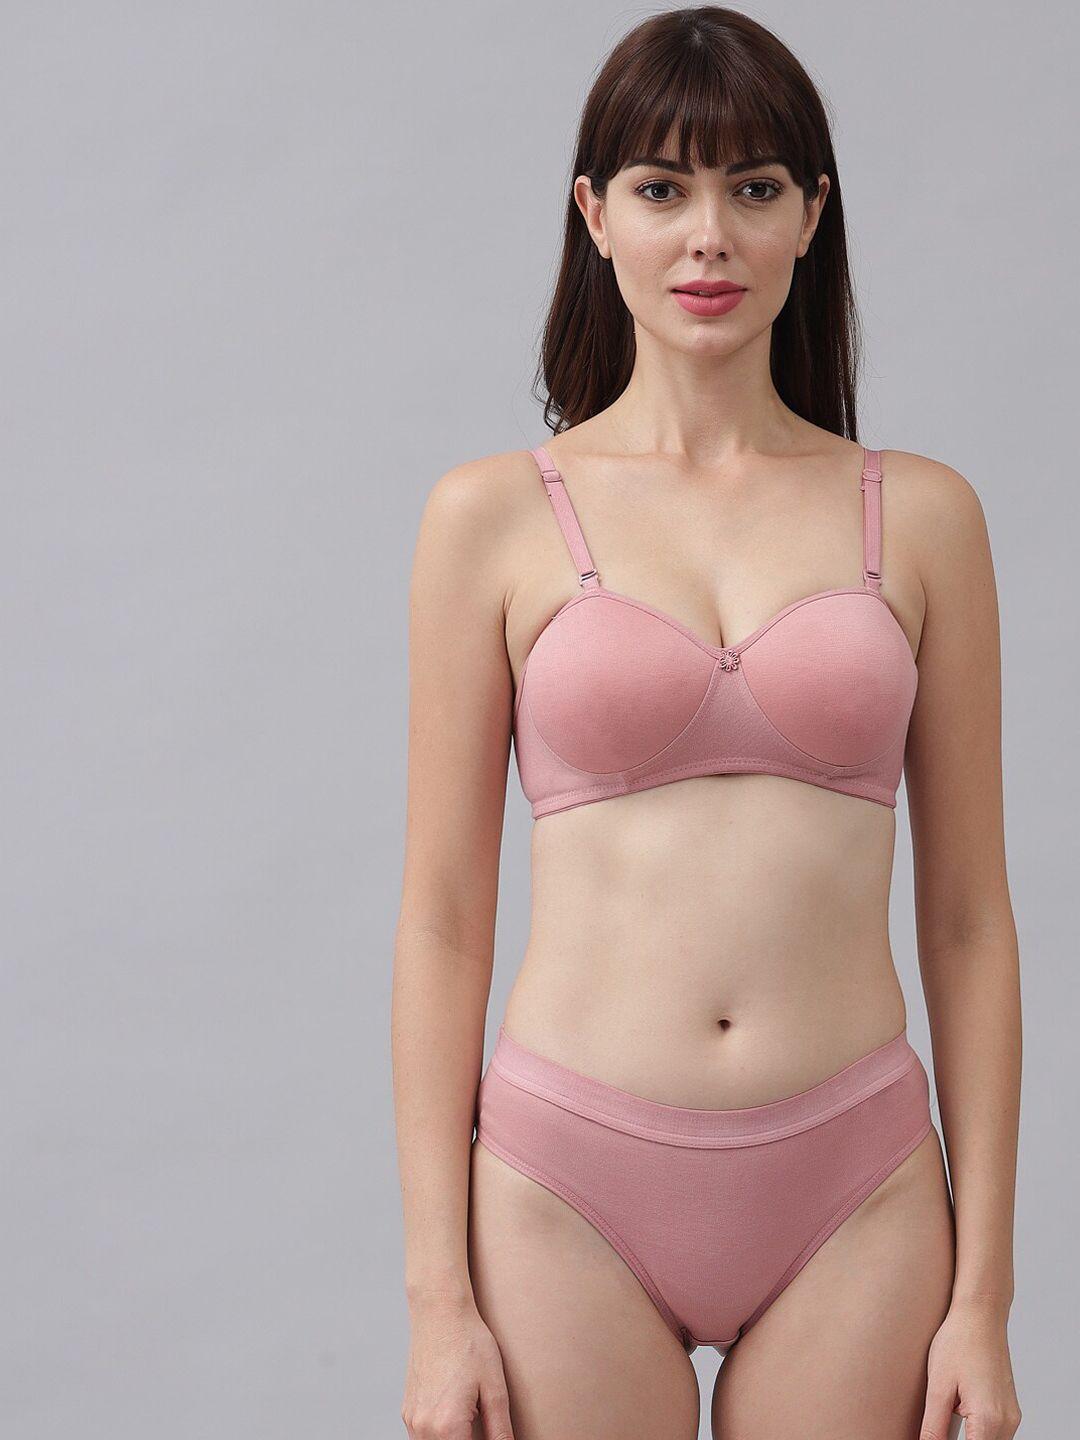 imsa moda half padded wire free lingerie set new-eng-set-pink-30